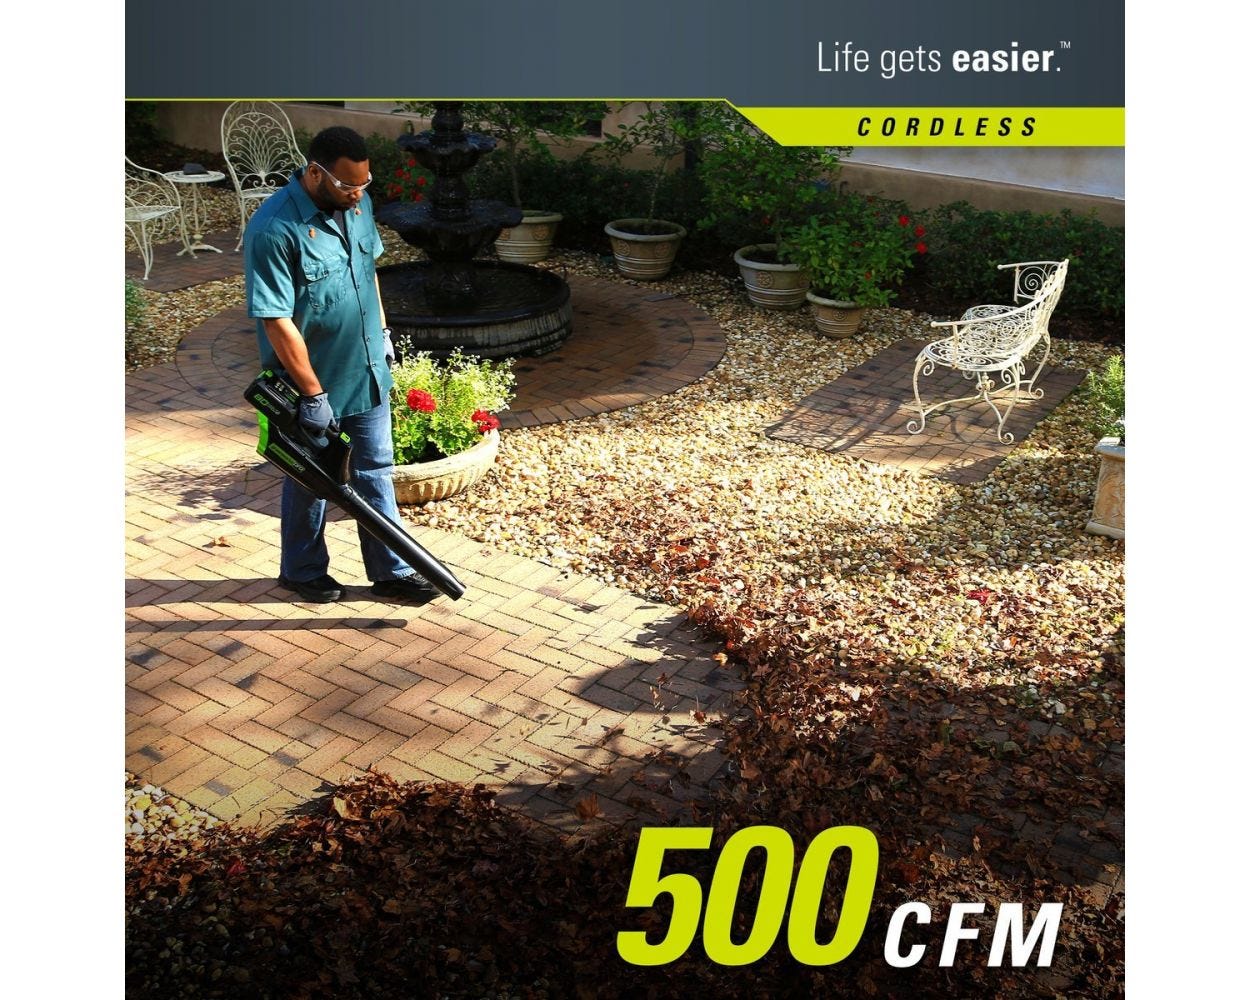 80V Cordless 500 CFM Brushless Leaf Blower | Greenworks Pro